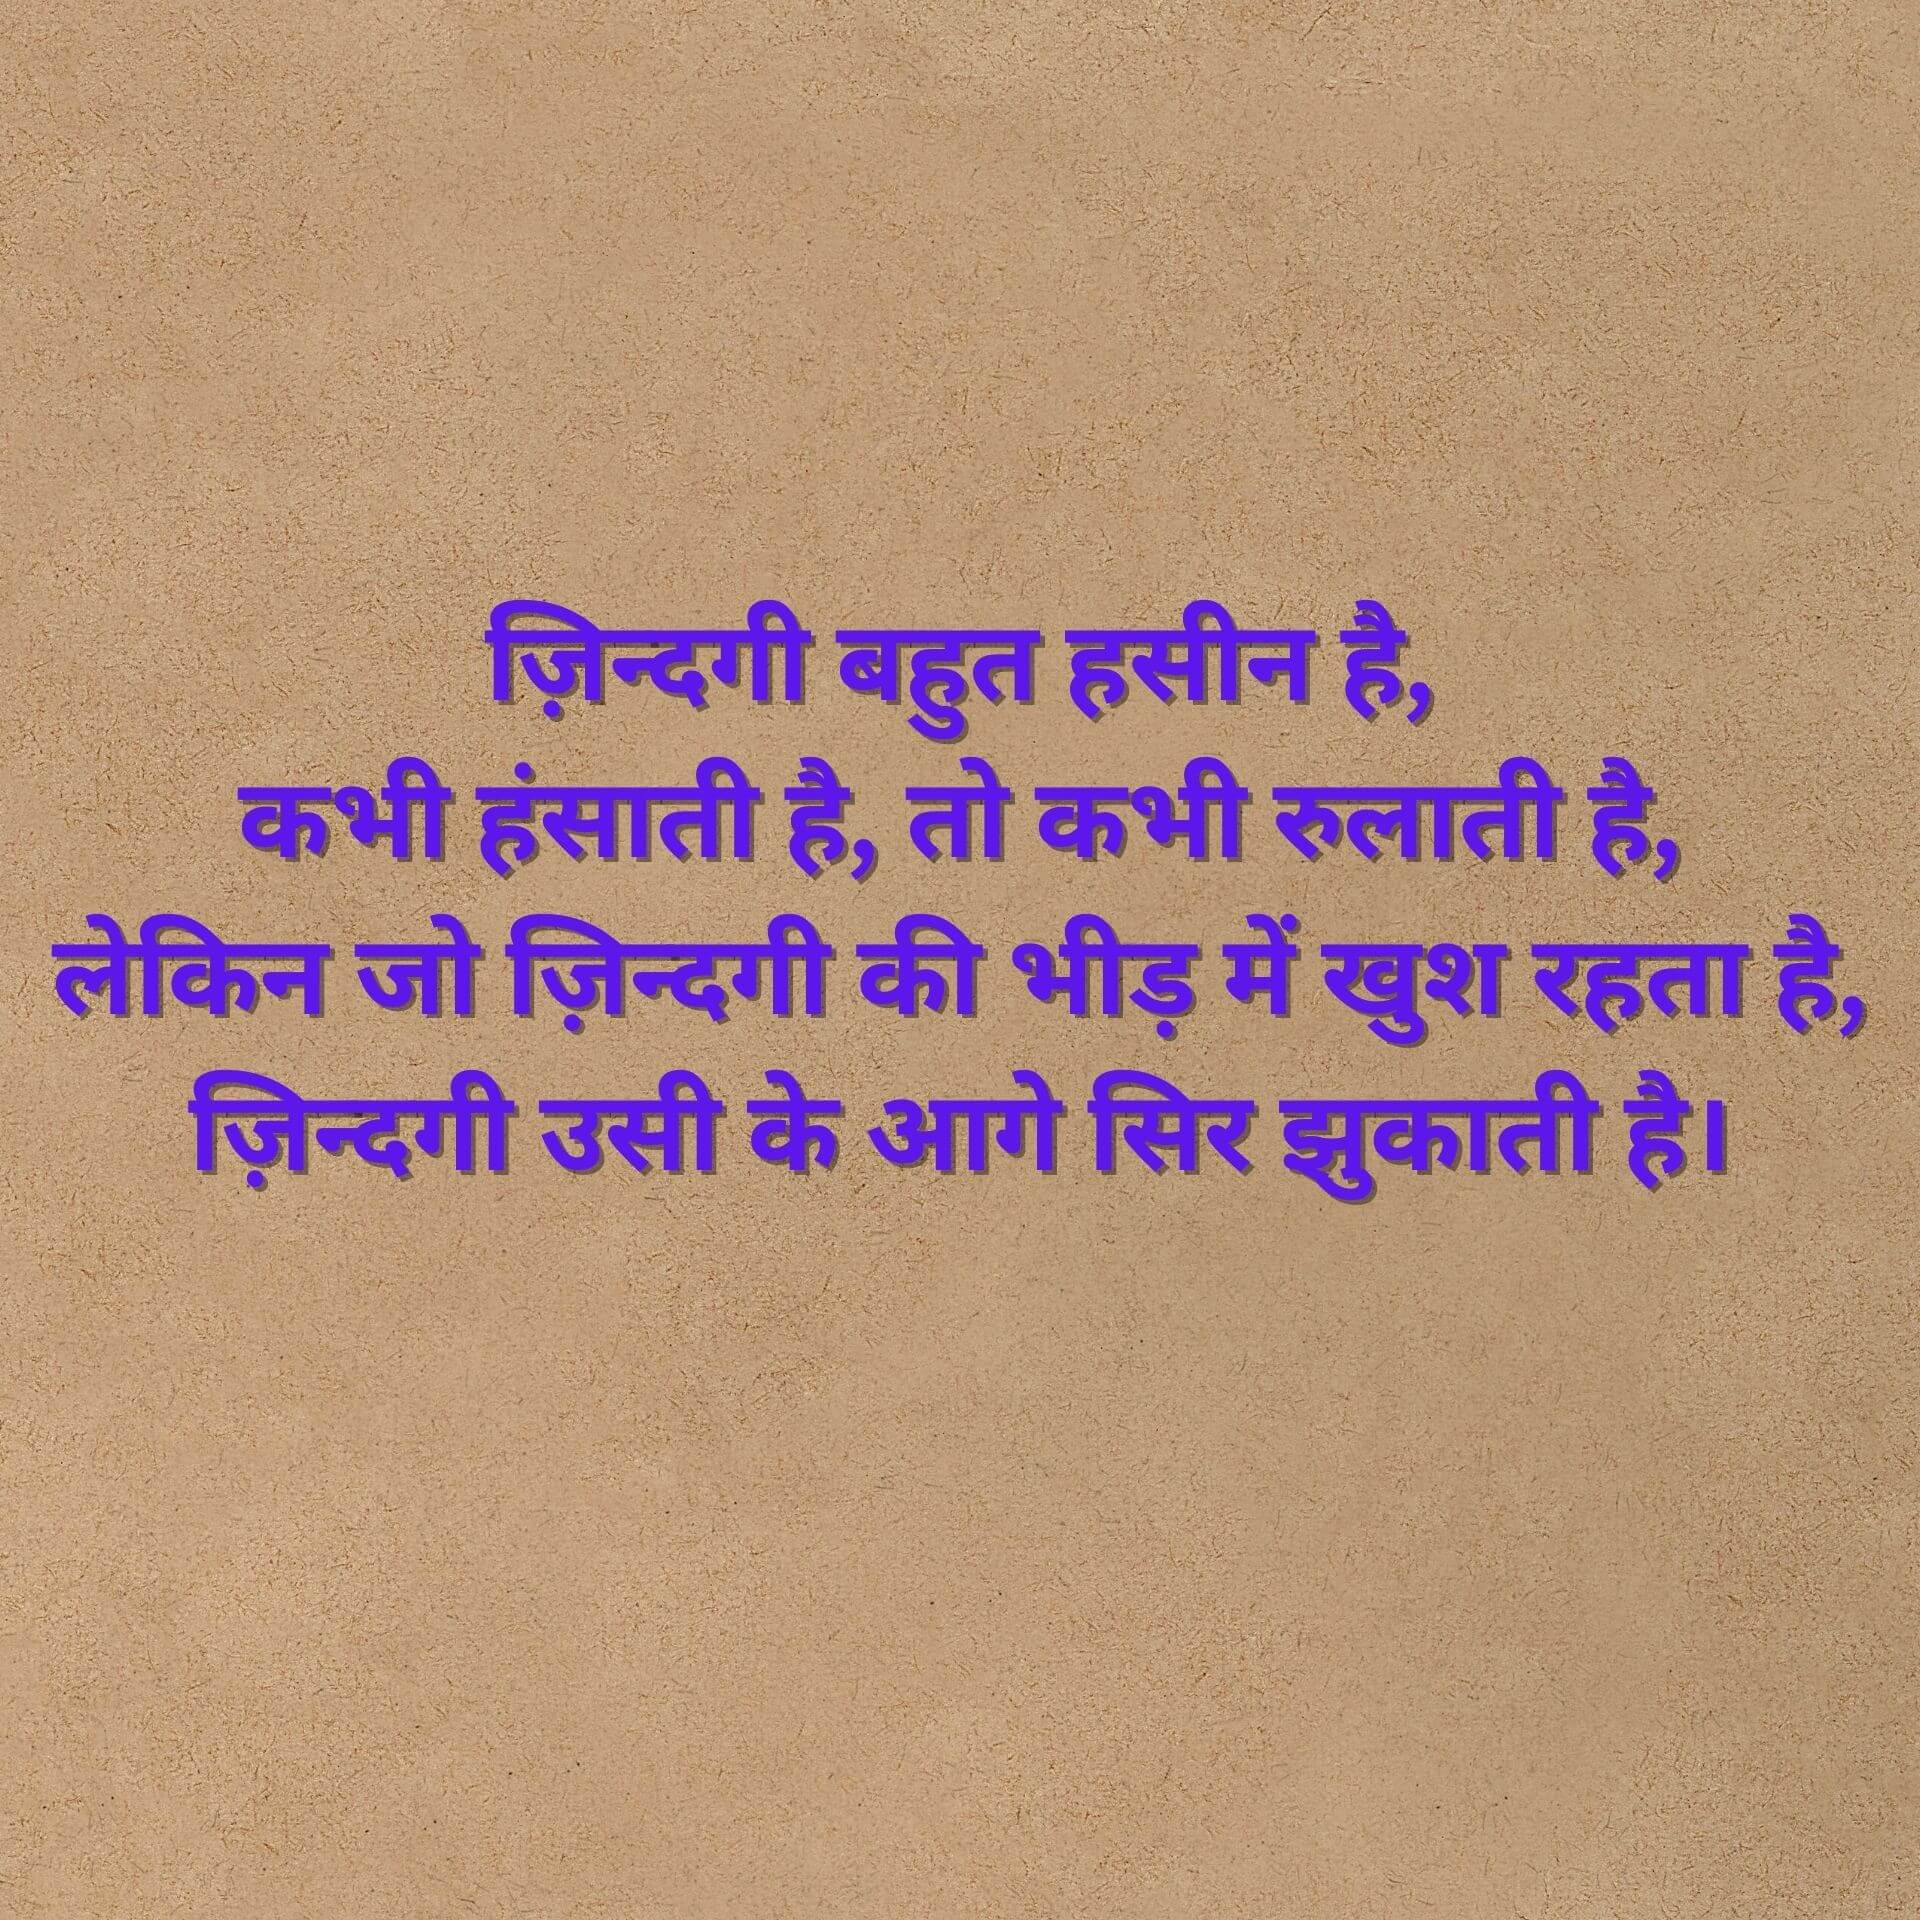 Hindi inspirational quotes Photo Download 2023